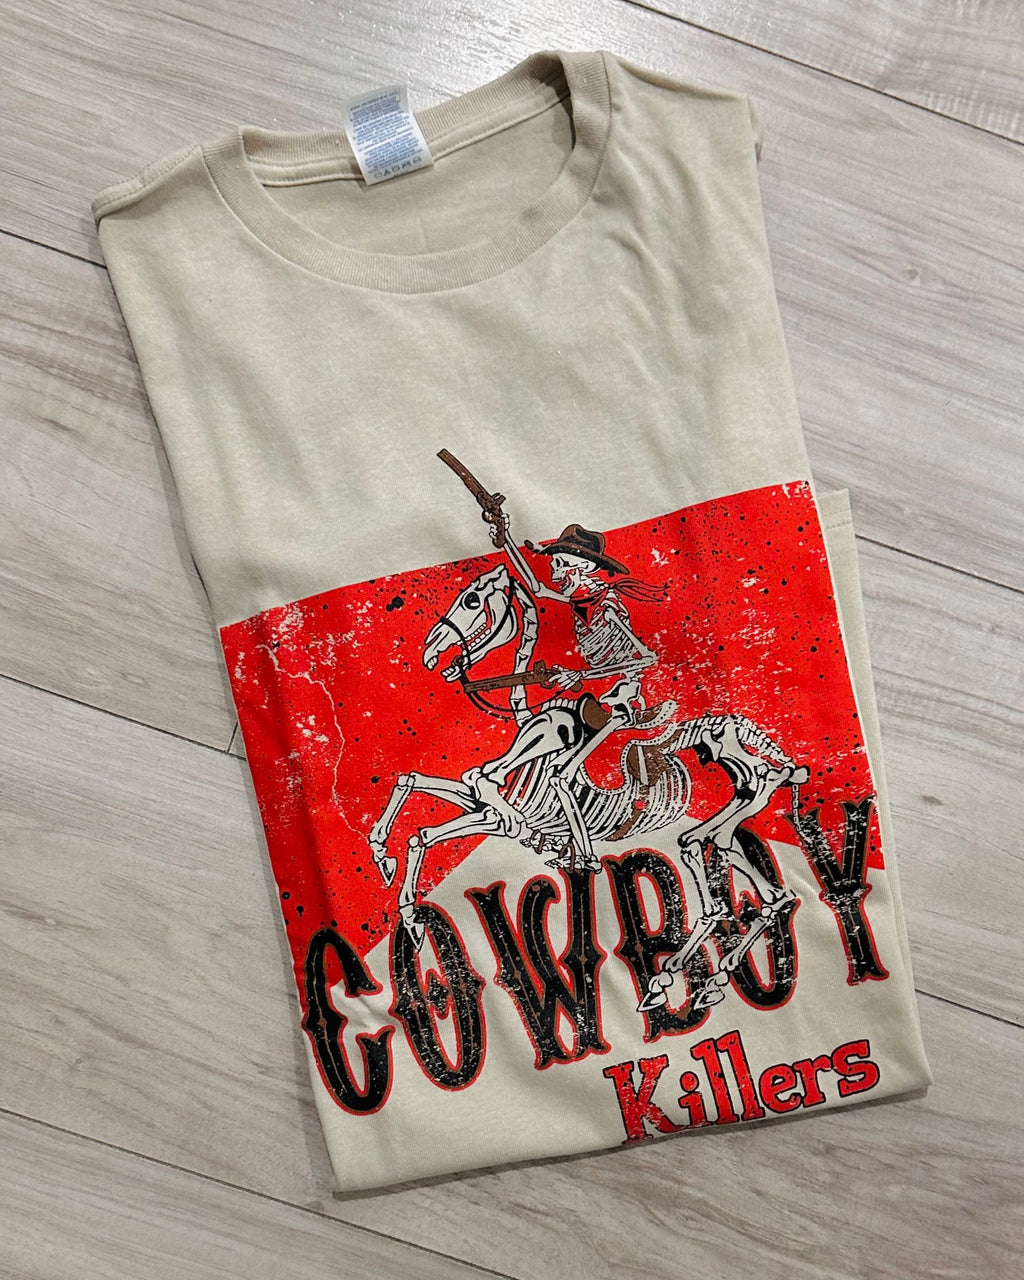 Cowboy Killer Graphic Tee